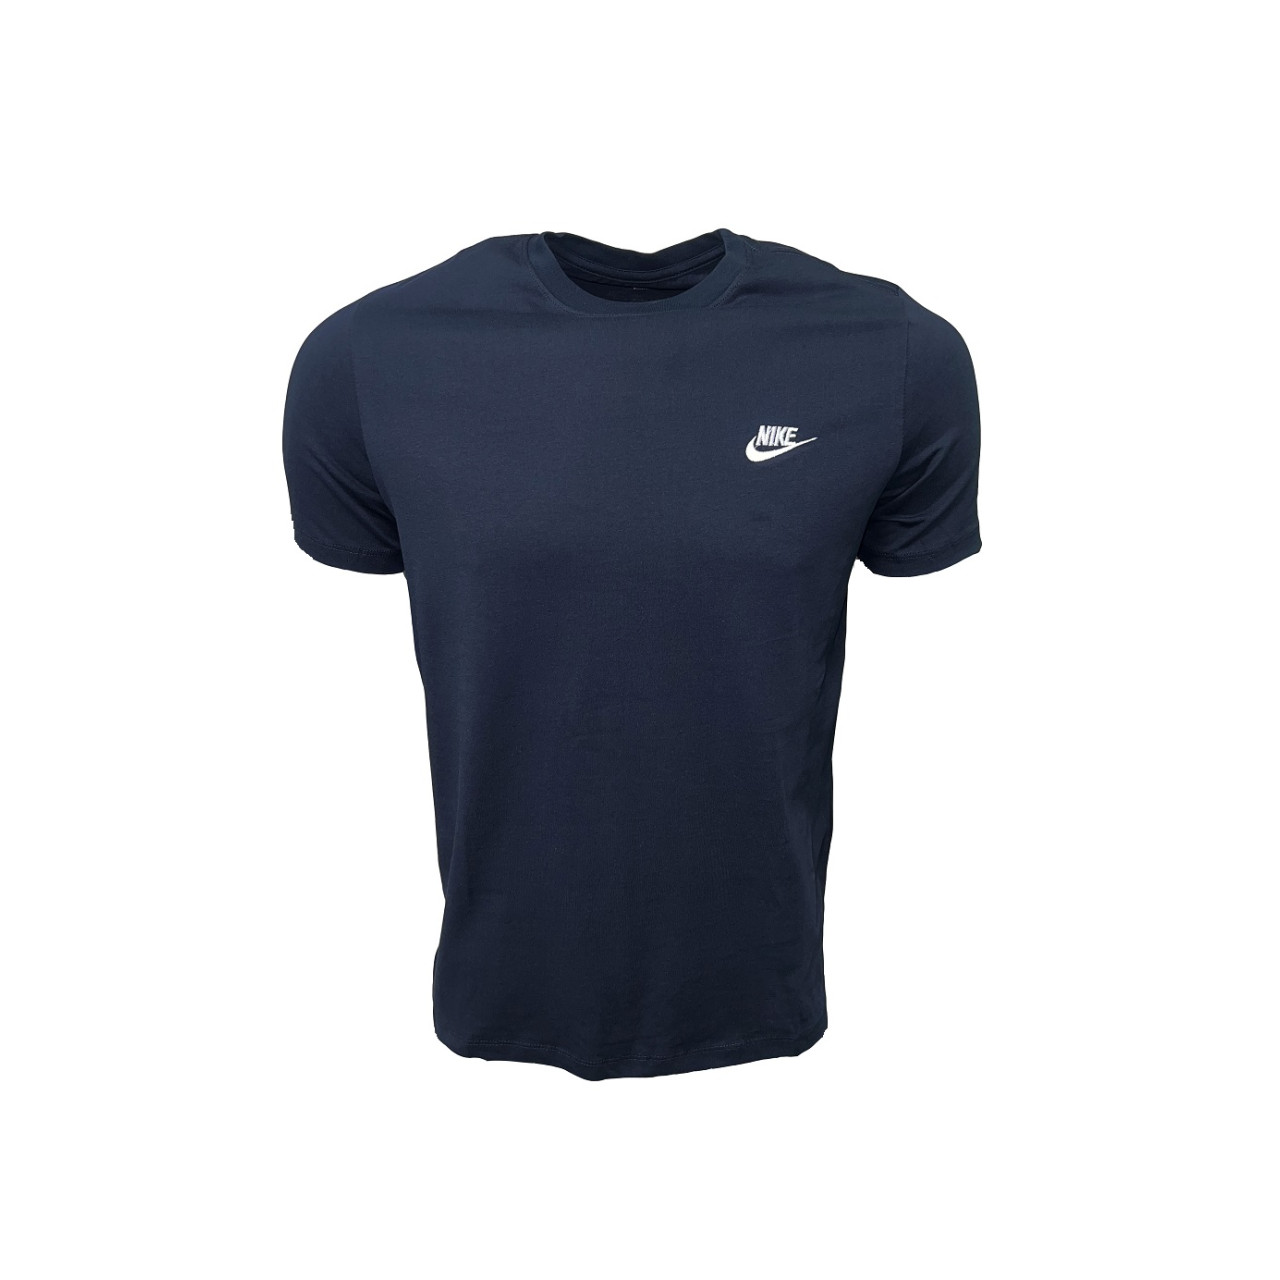 Nike Classic T-shirt Dark Blue